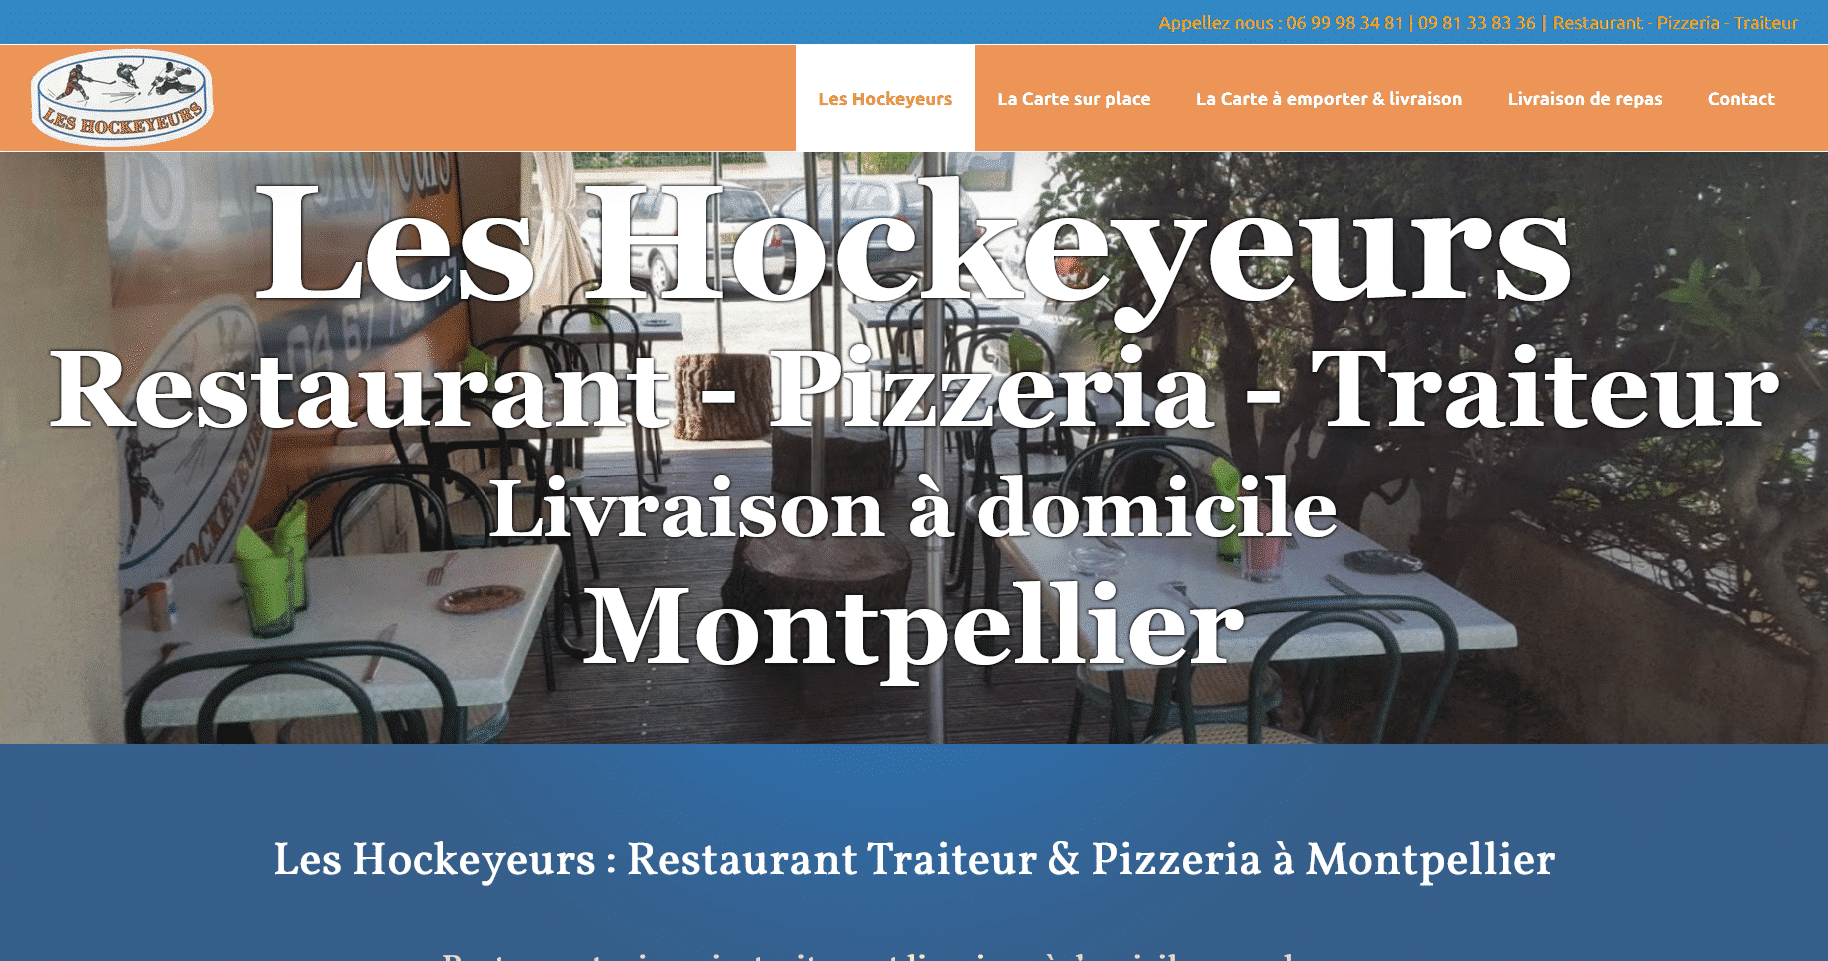 Les Hockeyeurs Restaurant